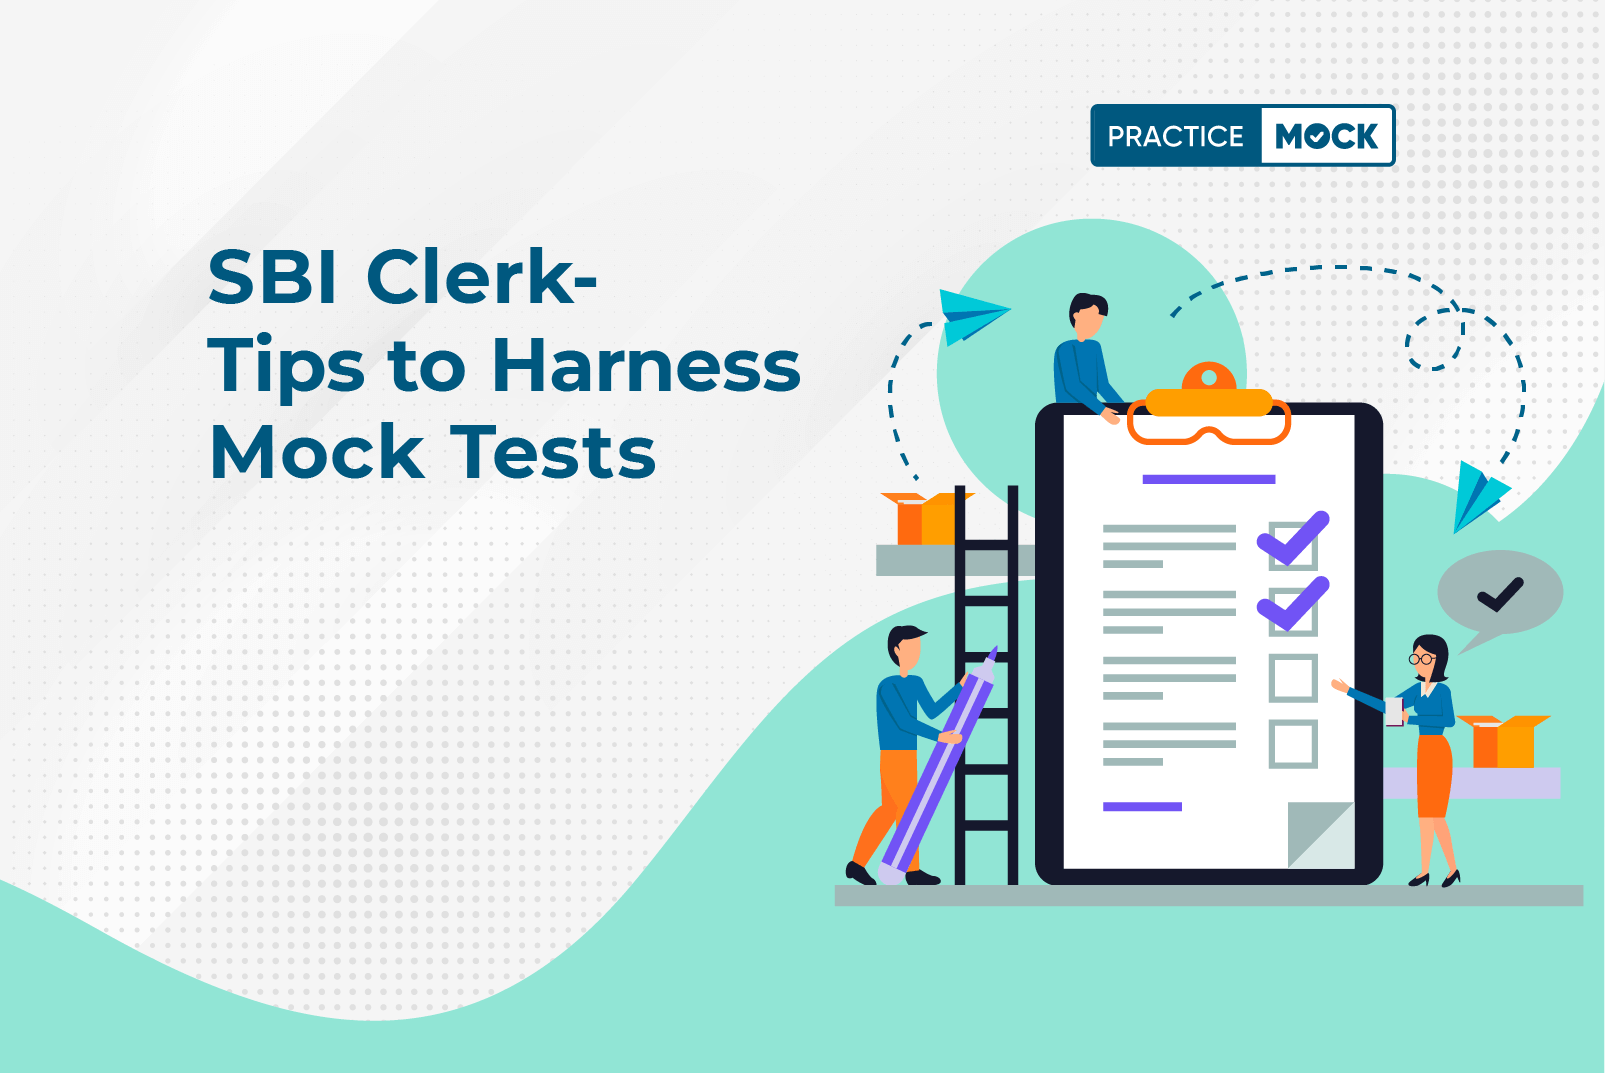 SBI Clerk Prelims- Tips to Harness Mock Tests